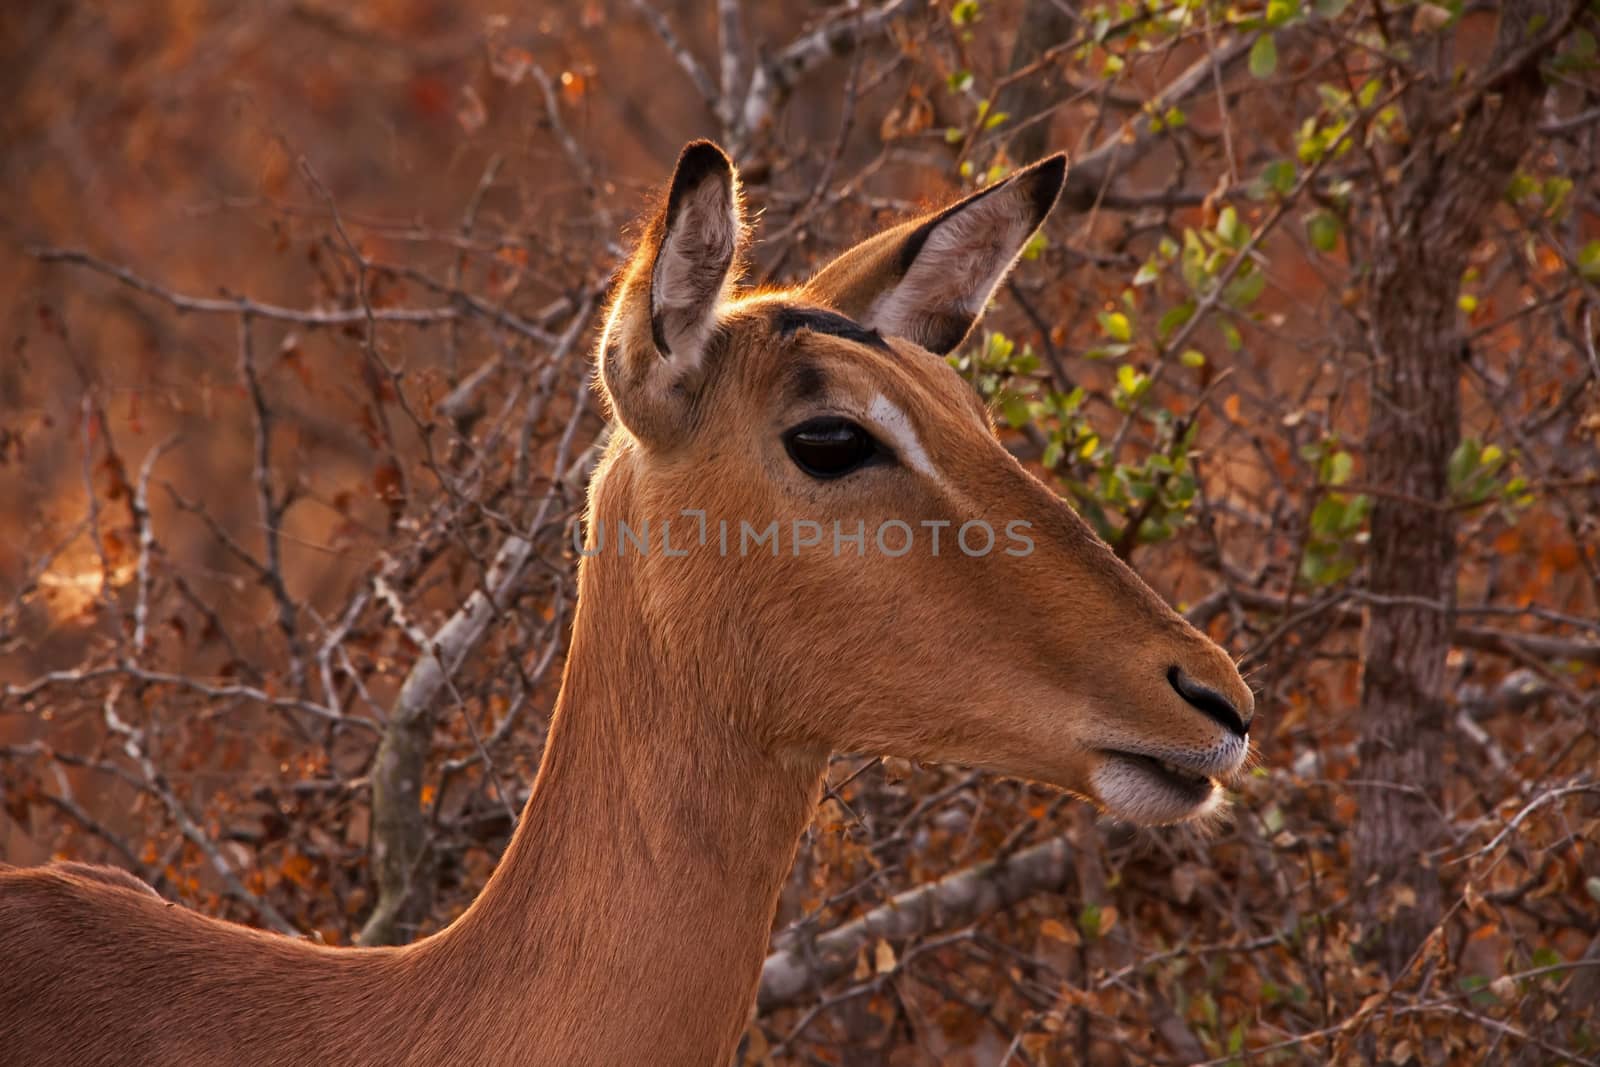 Impala (Aepyceros melampus) photographed in Kruger National Park, South Africa.